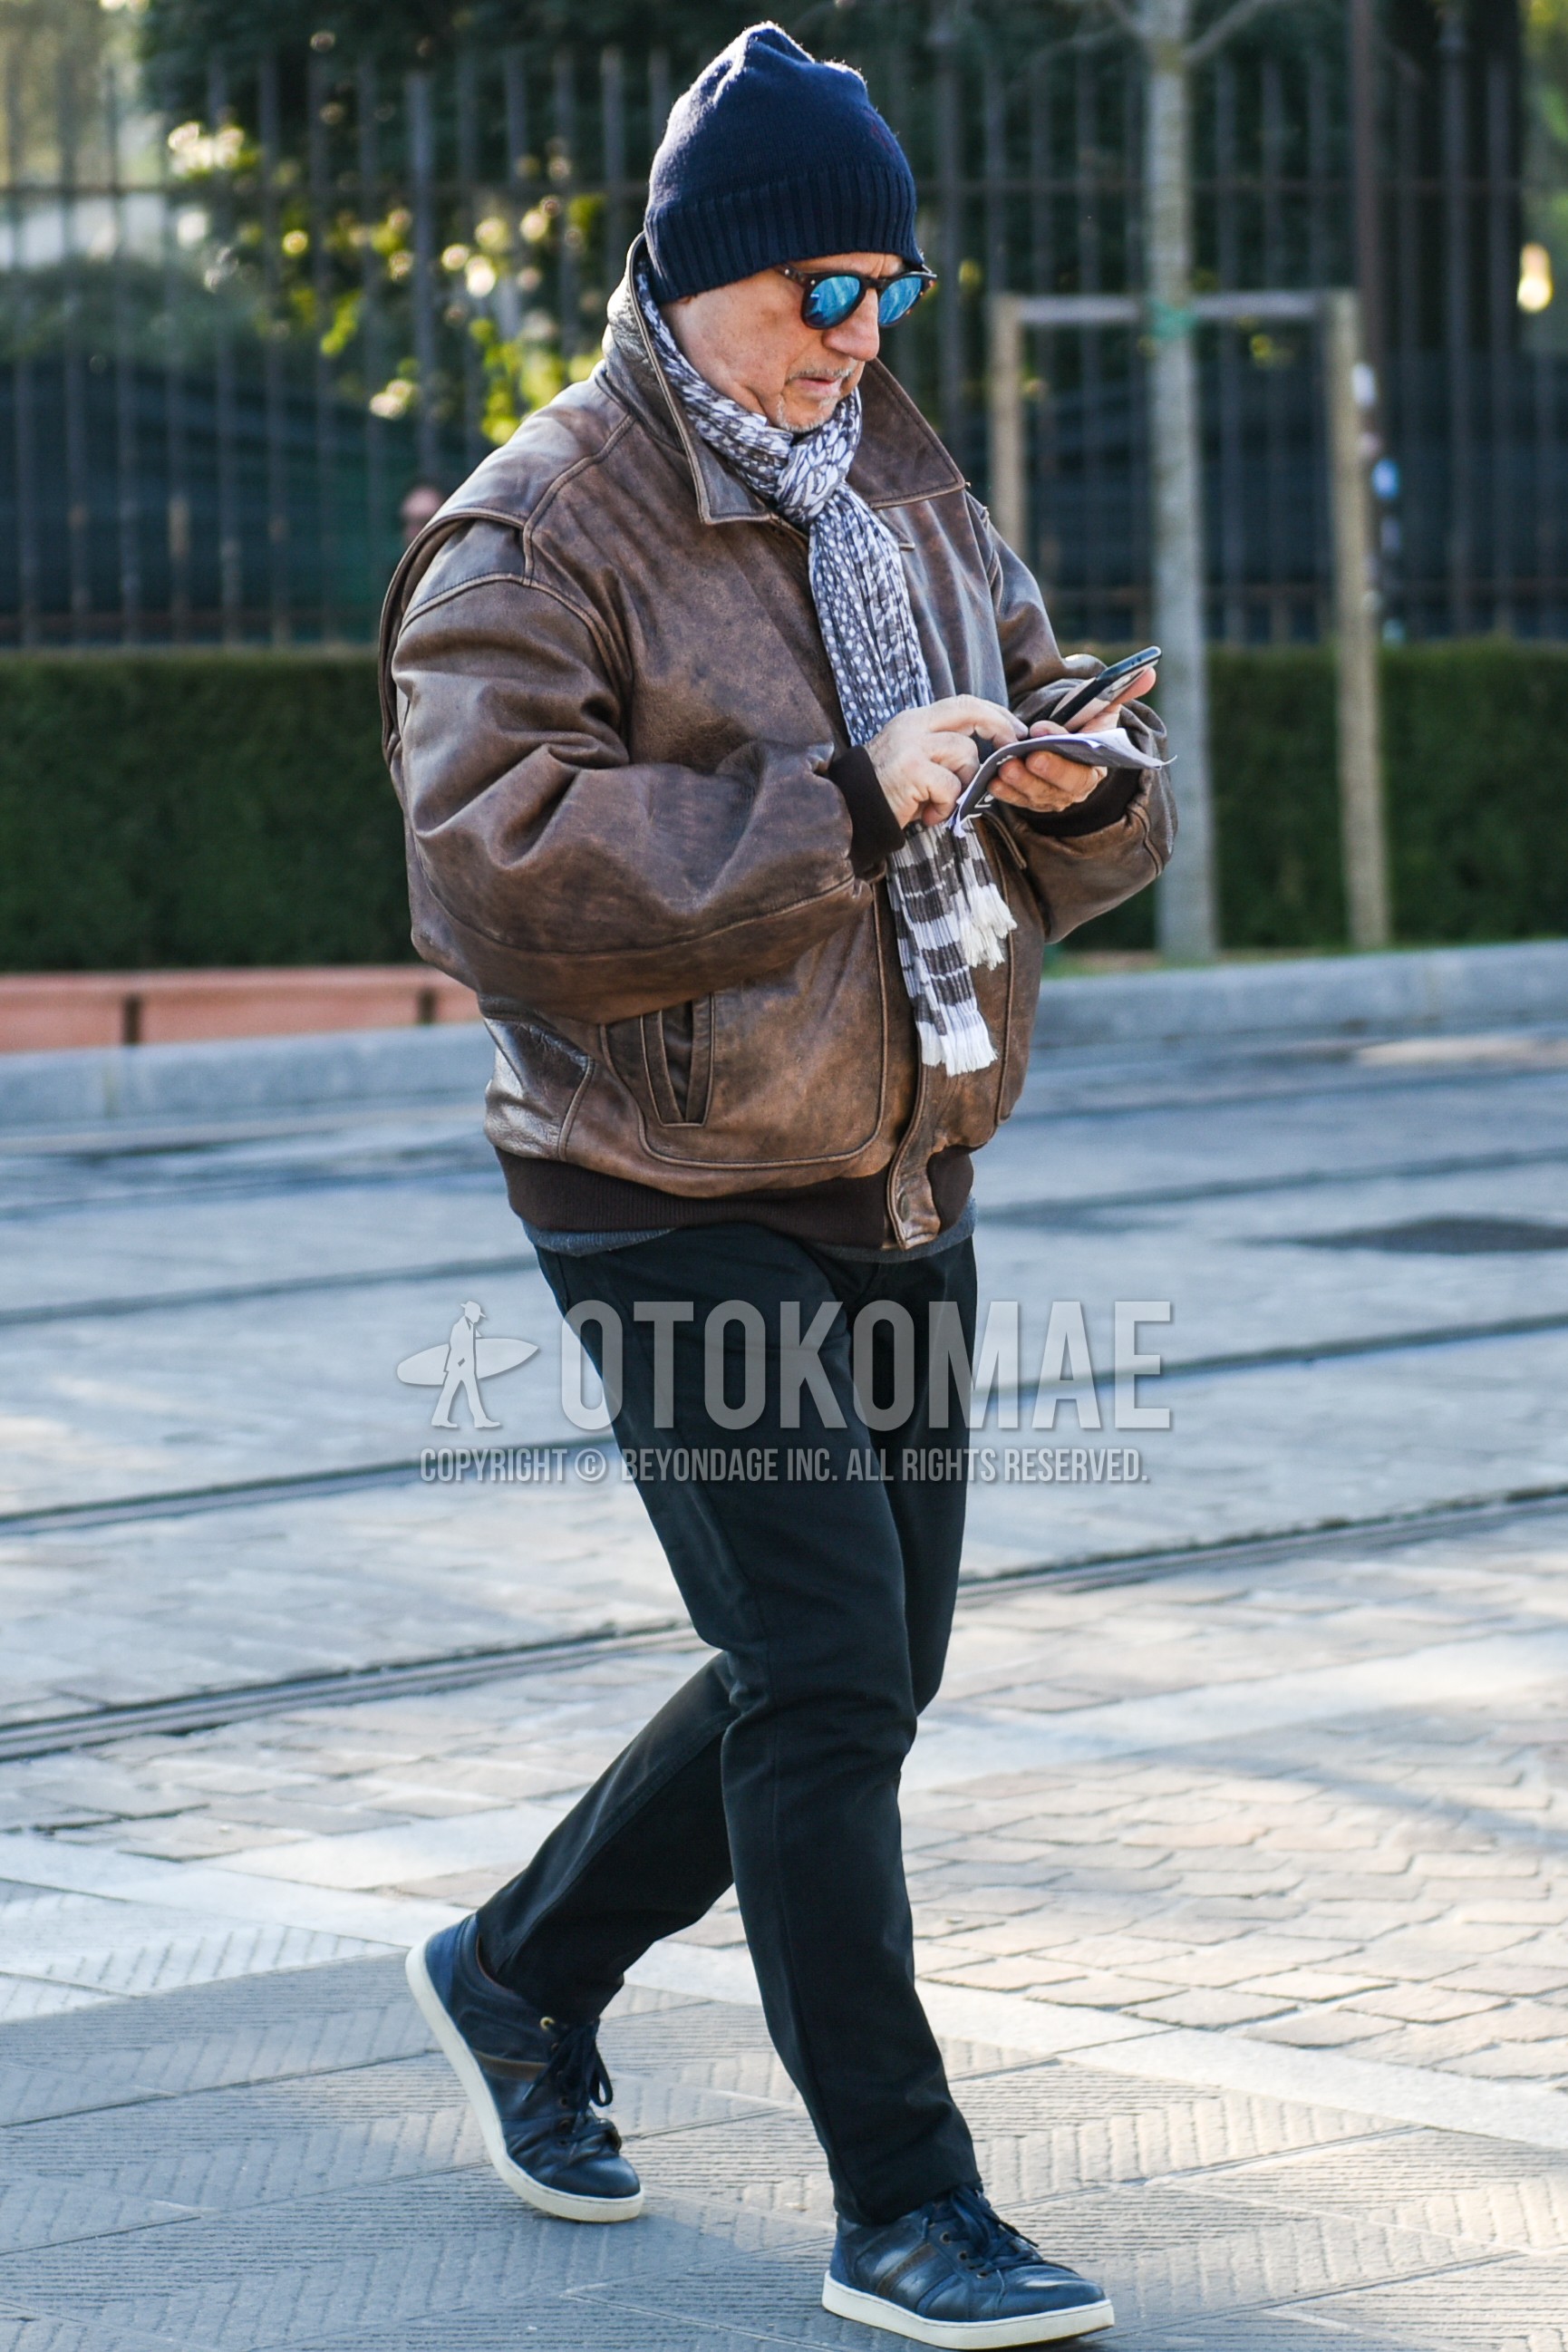 Men's autumn winter outfit with gray plain knit cap, brown tortoiseshell sunglasses, gray scarf scarf, brown plain leather jacket, brown plain military jacket, black plain cotton pants, gray low-cut sneakers.